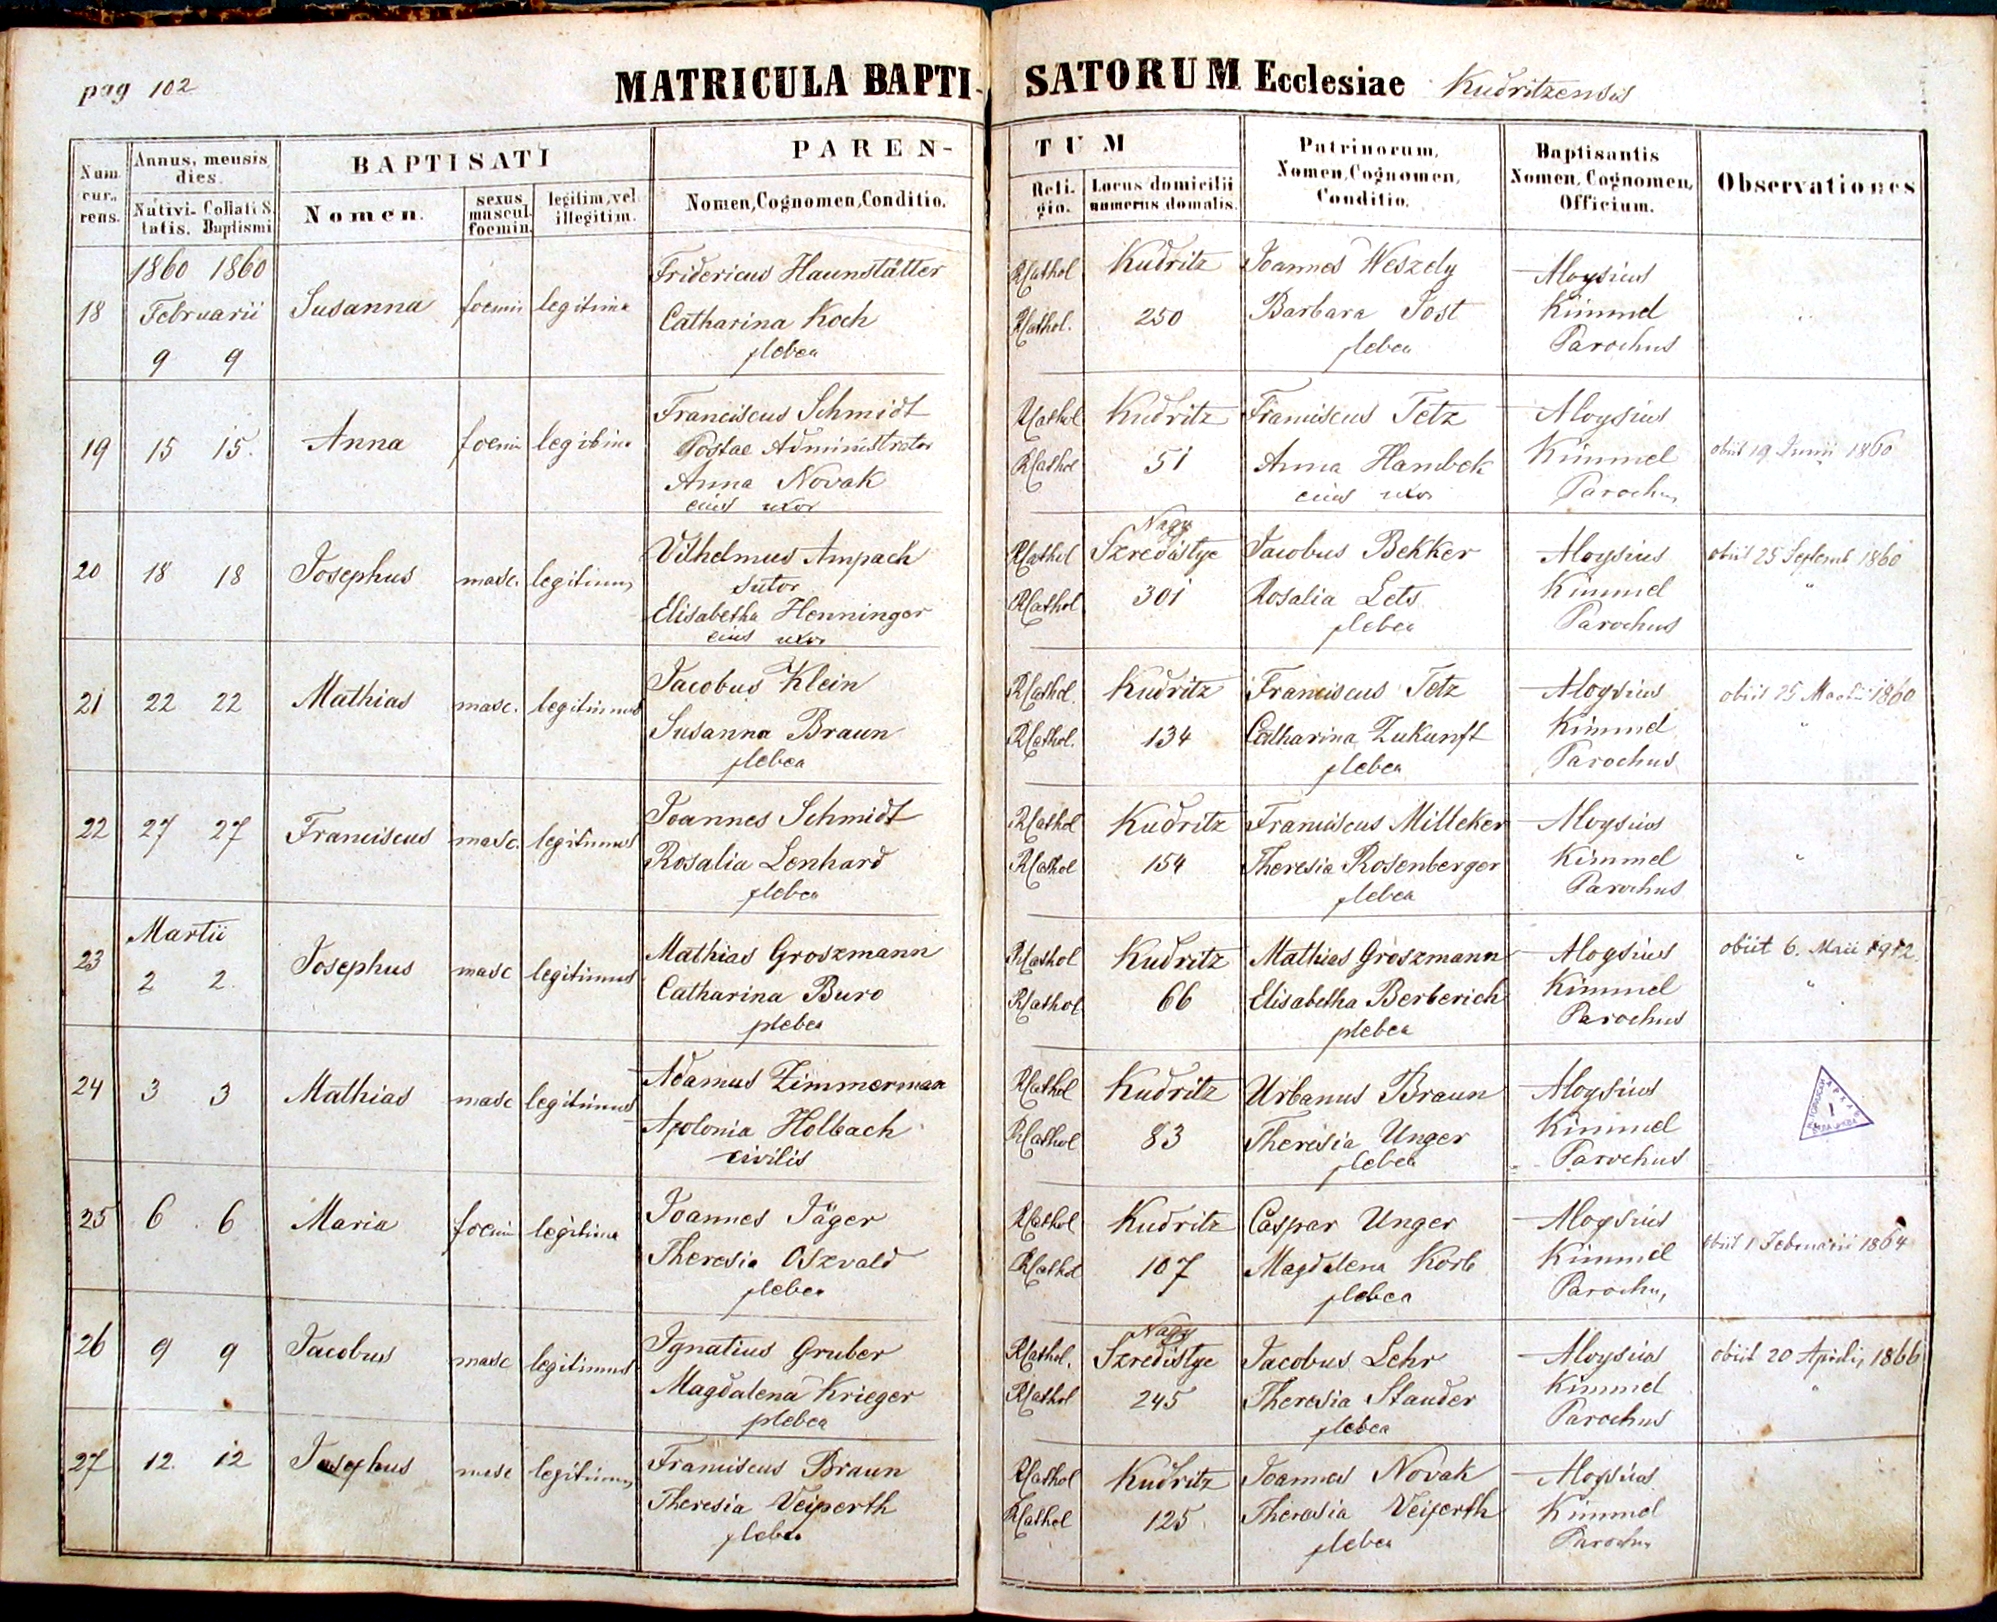 images/church_records/BIRTHS/1852-1870B/102